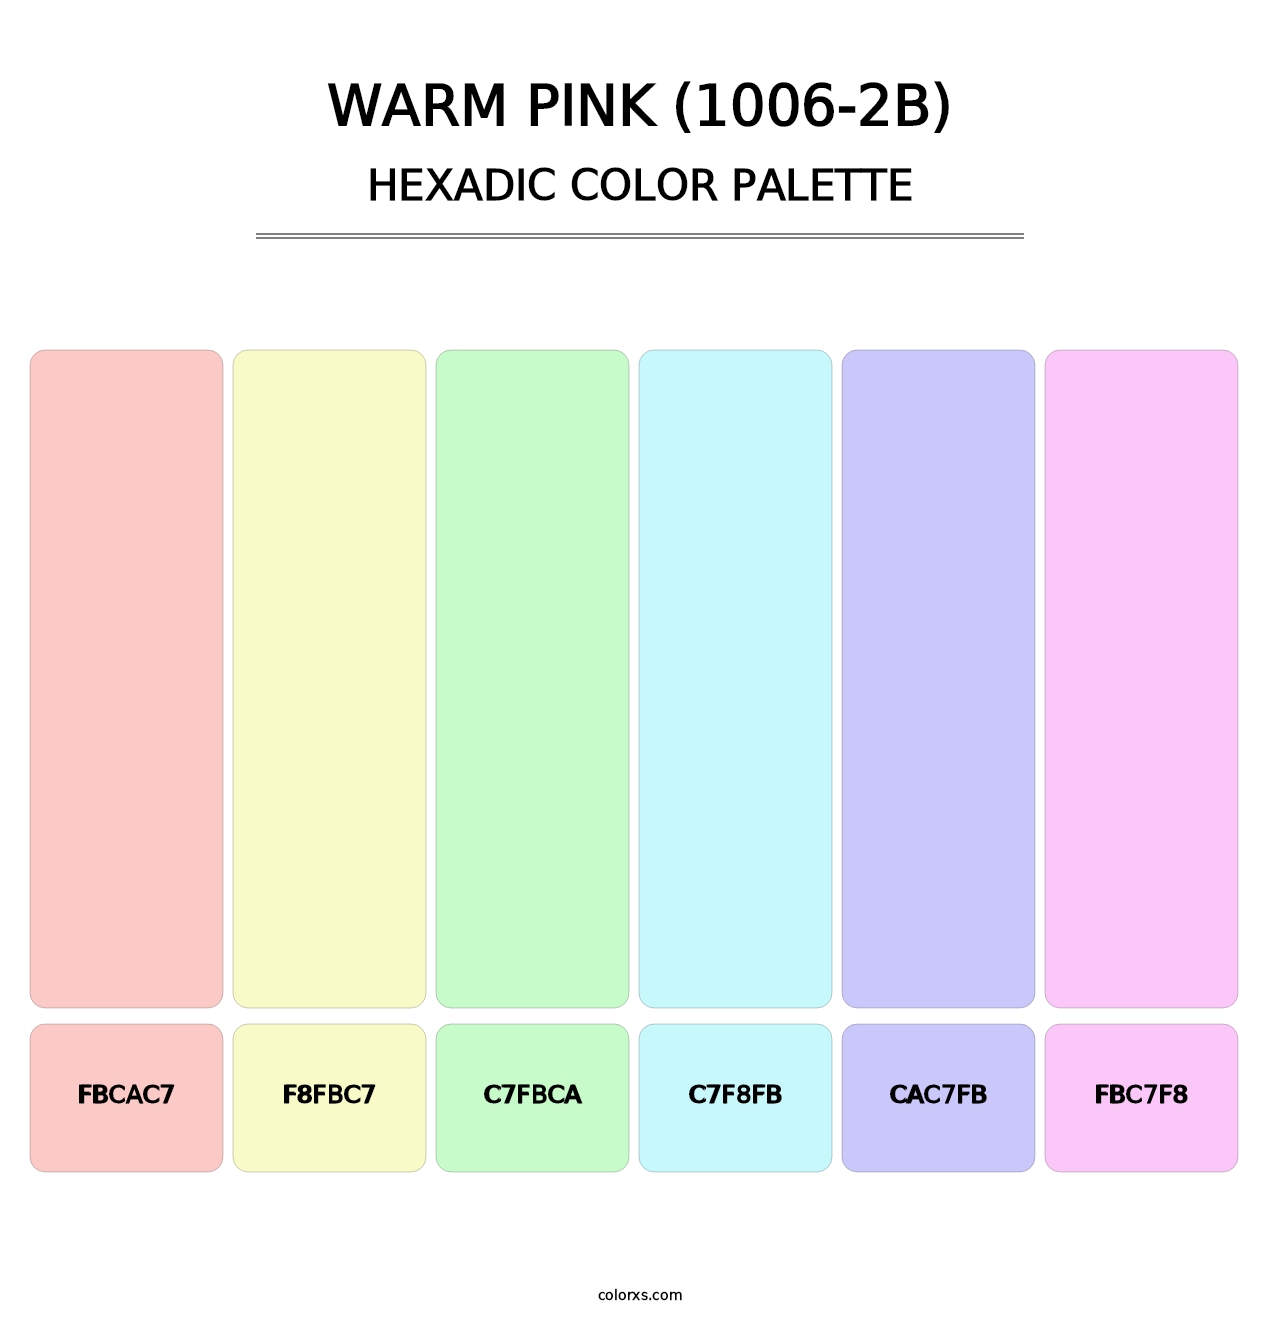 Warm Pink (1006-2B) - Hexadic Color Palette